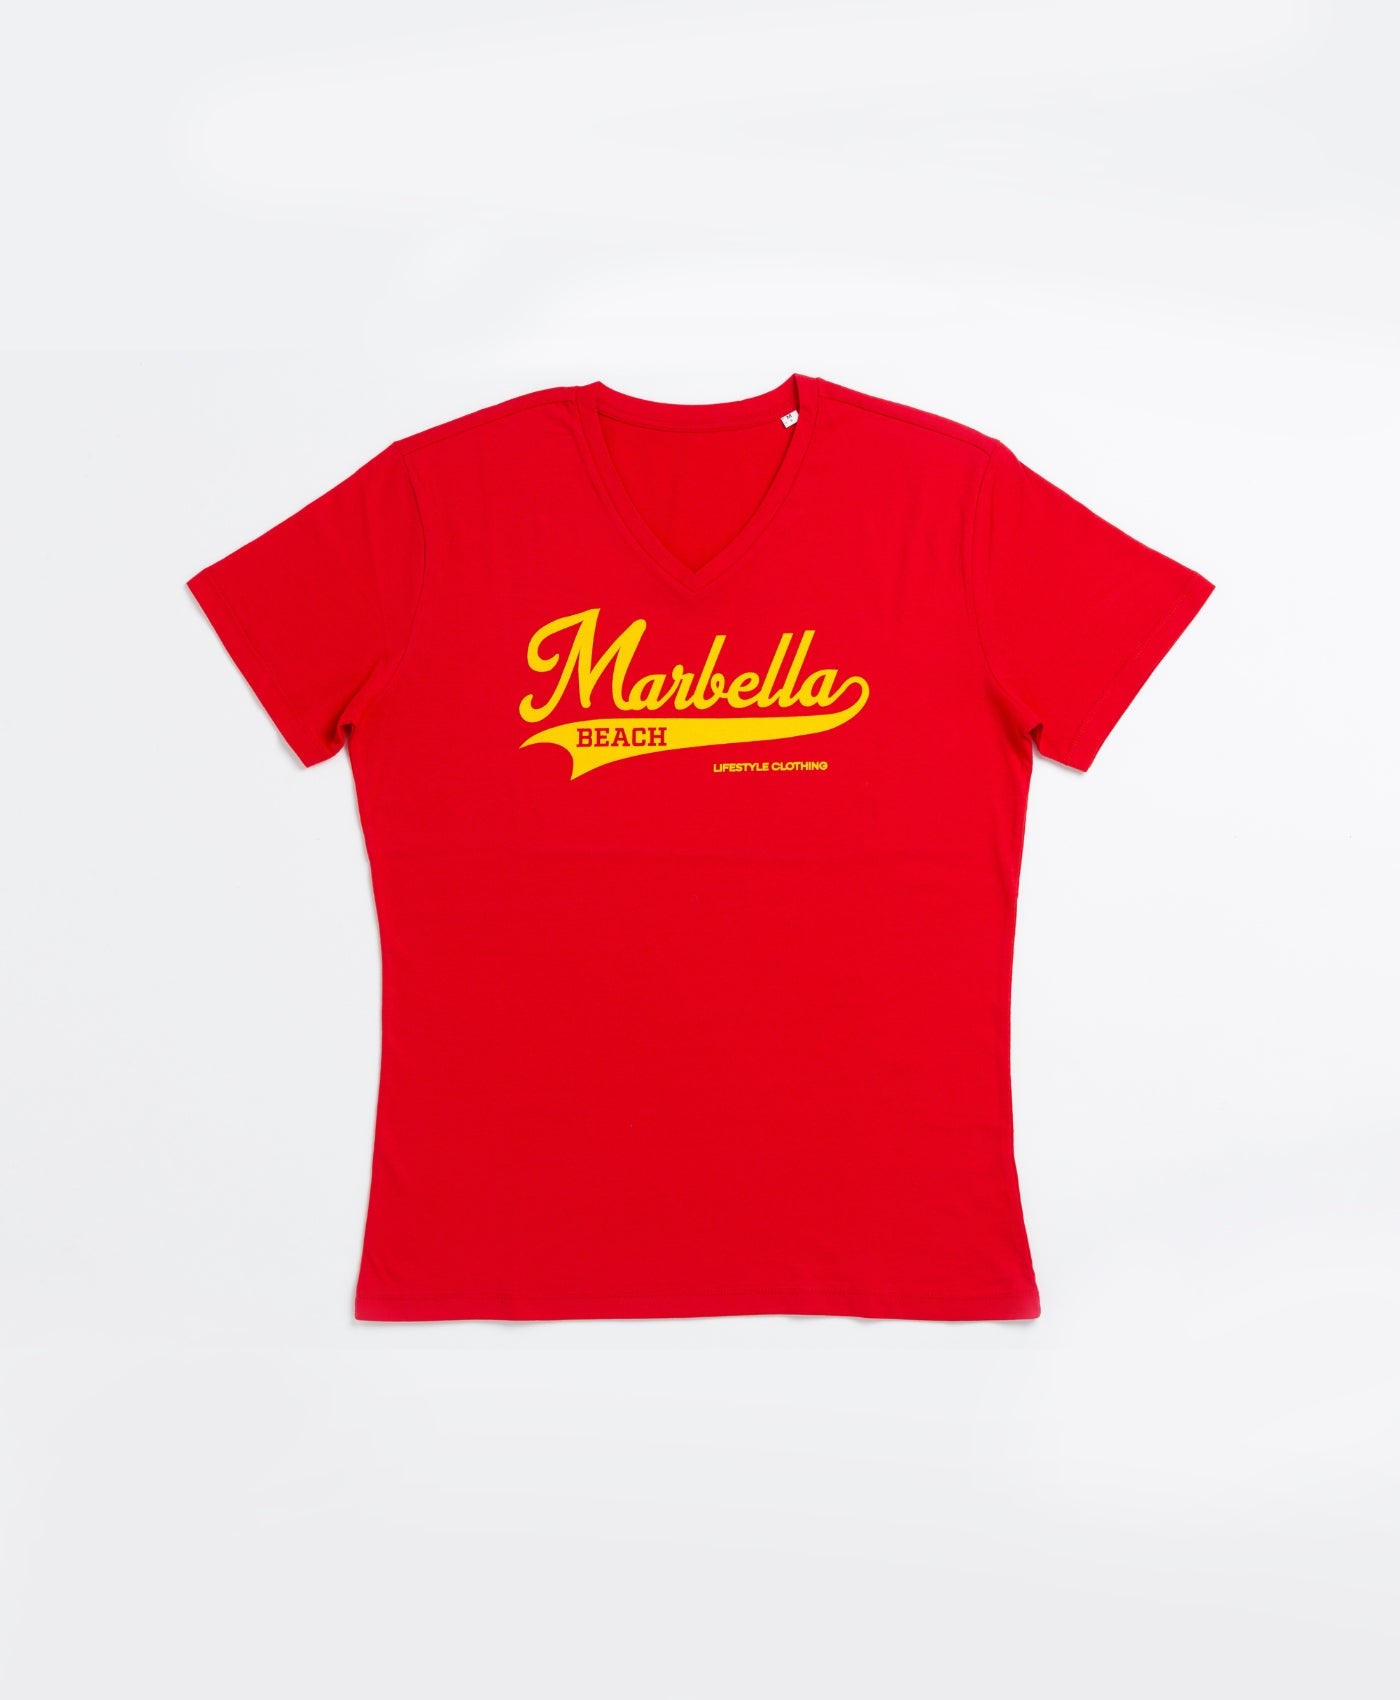 Red "V Neck" T-Shirt for Men